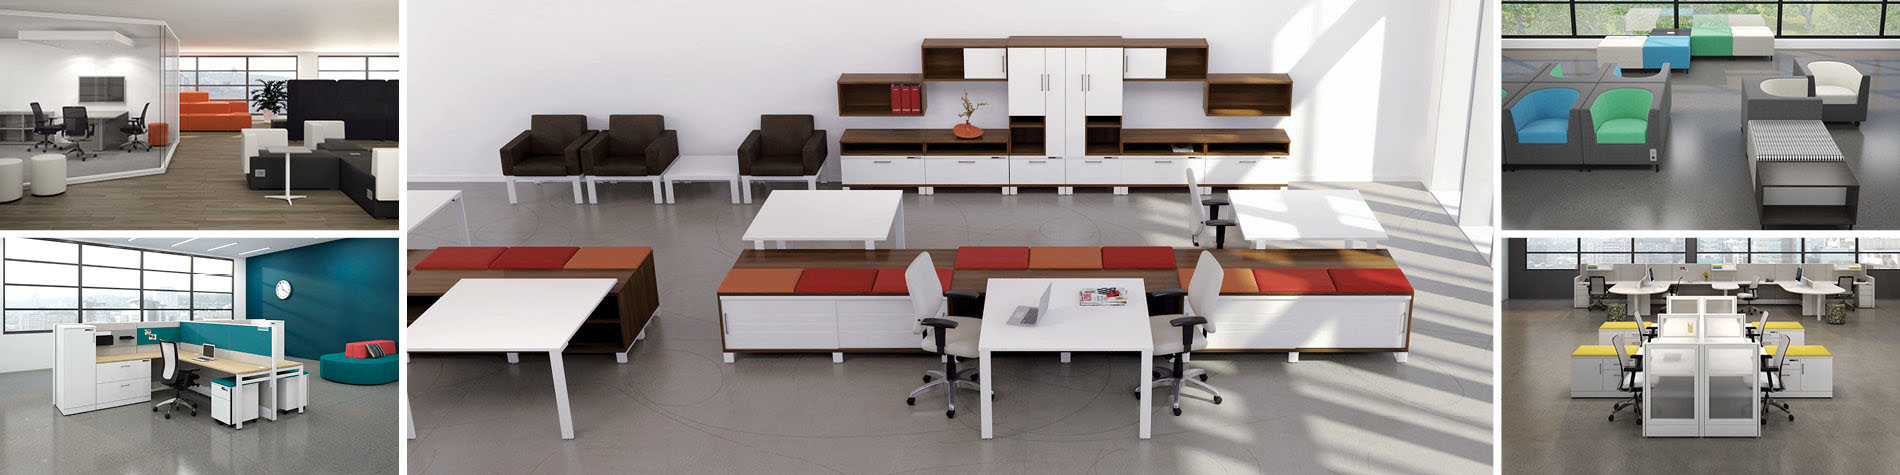 Artopex Office Furniture